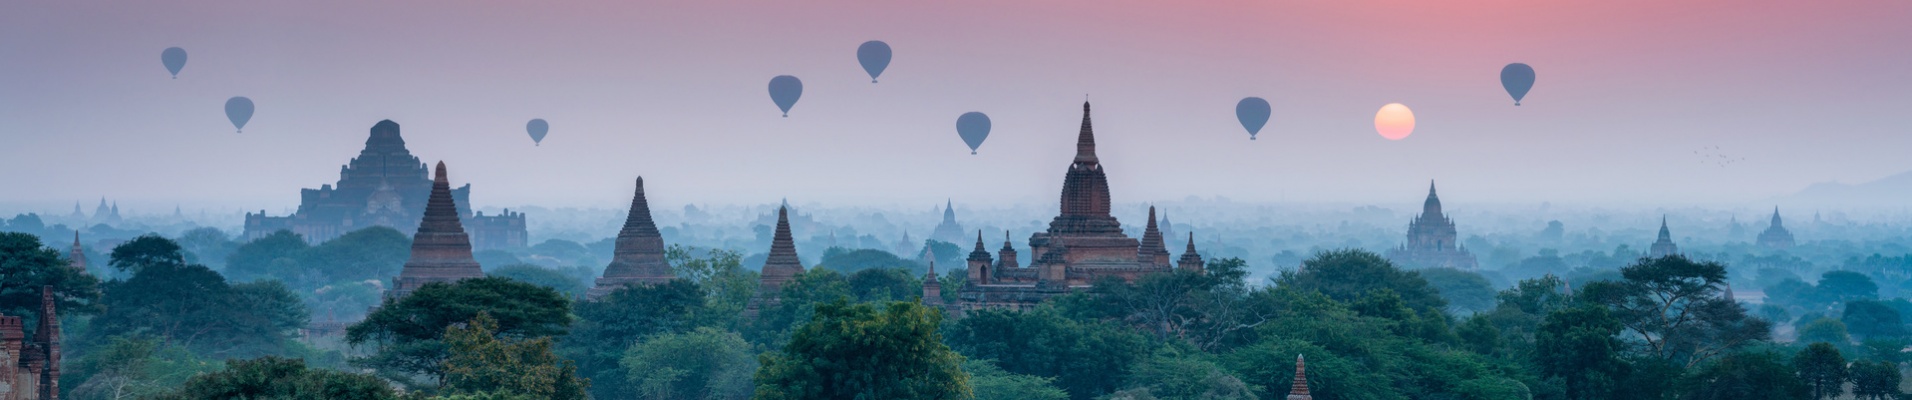 bagan birmanie panorama sunset